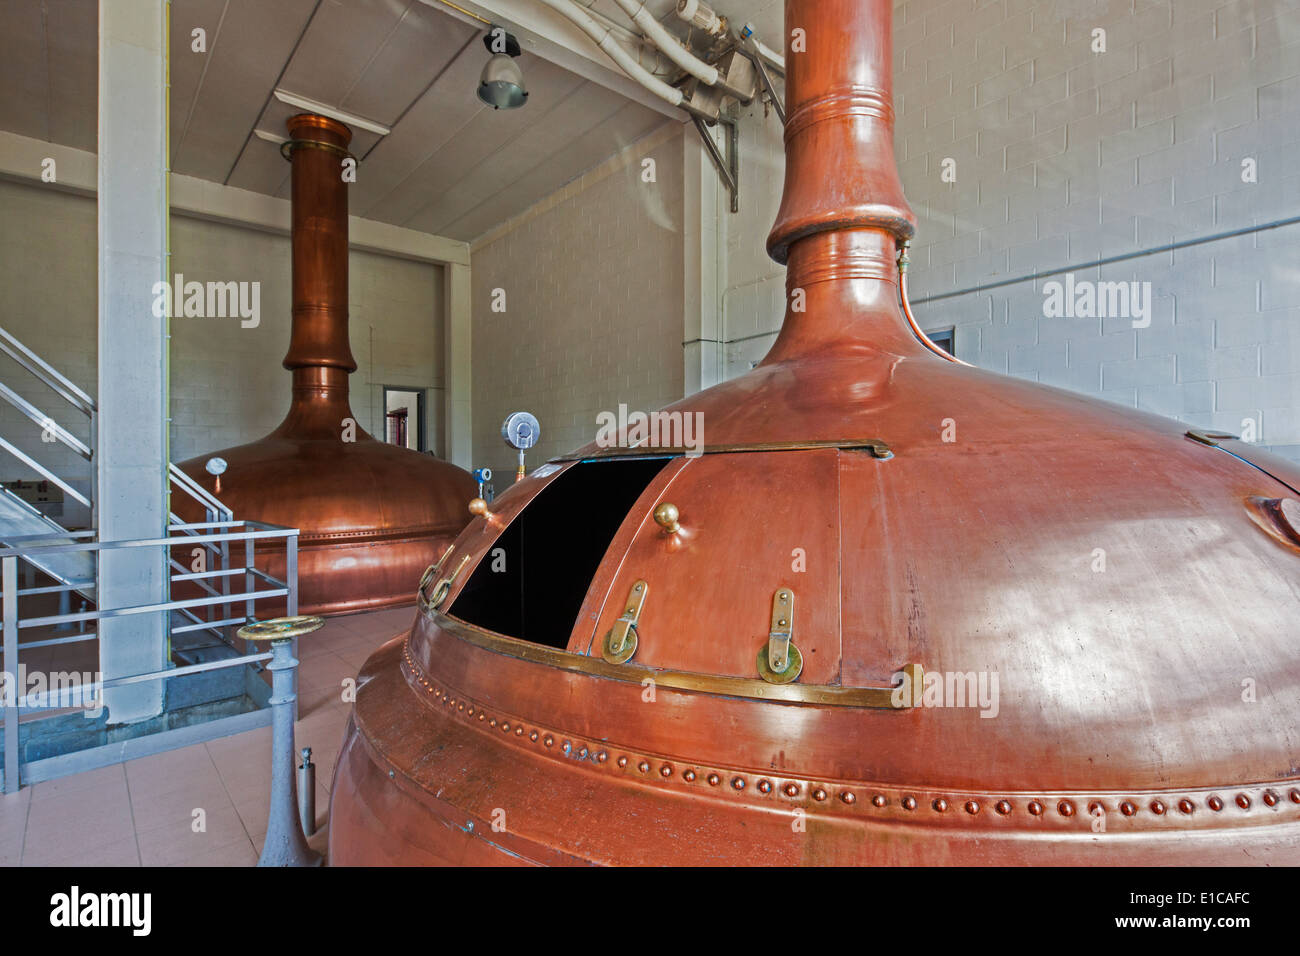 Kupfer Gebräu Wasserkocher bei Brouwerij Lindemans, belgische Brauerei in Vlezenbeek, Produzent von Geuze und Kriek Bier Stockfoto